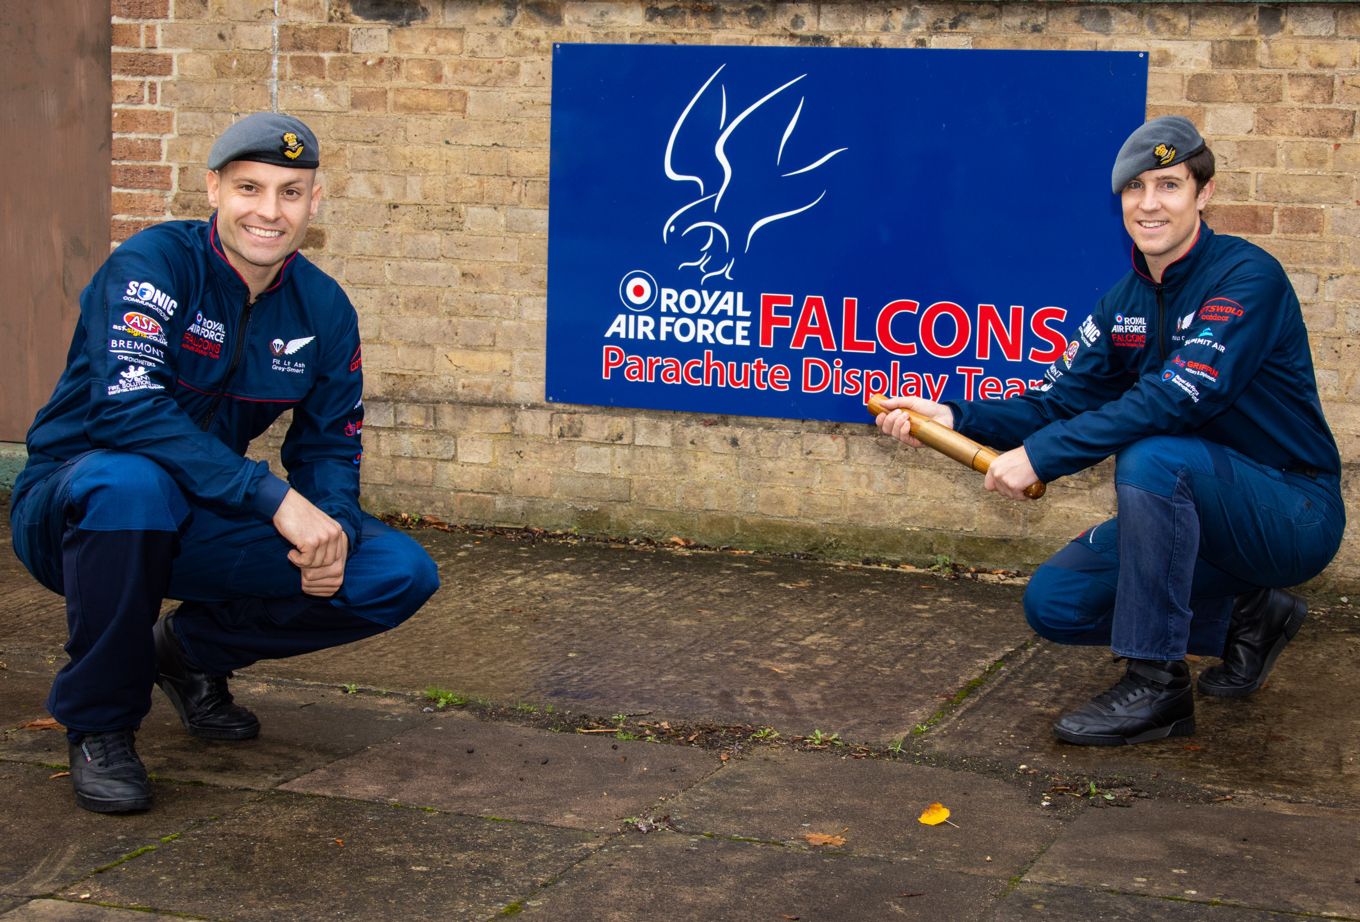 BZN-OFFICIAL-20201021-1317-0007 – Flight Lieutenant Chris Wilce, now officially the Officer Commanding RAF Falcons Parachute Display Team